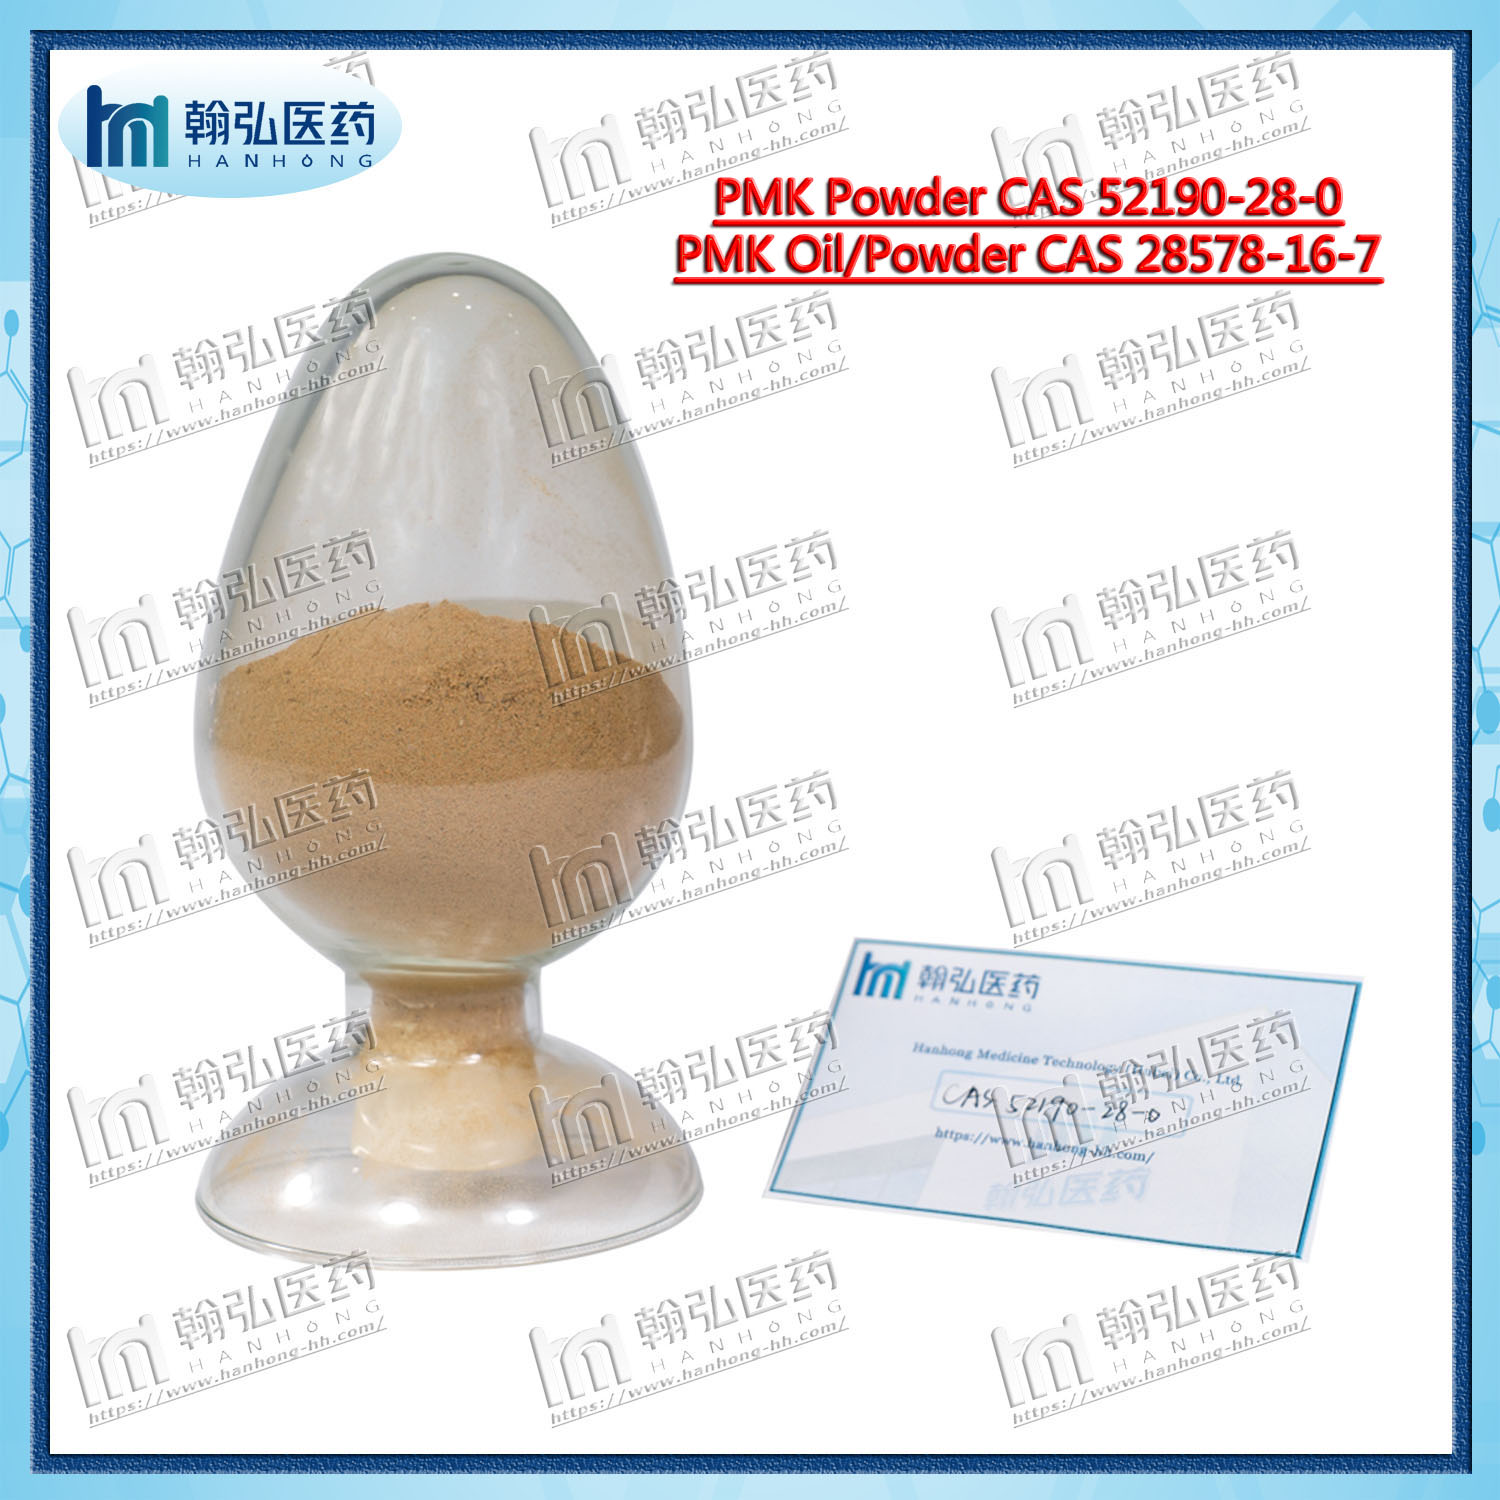 Hanhong is Reliable Supplier in China CAS 52190-28-0/28578-16-7/New Pmk Powder/Bmk 5449-12-7 Powder /20320-59-6 Oil (WhastApp/Telegram/WeChat: +8615927457486 WickrMe: Ccassie